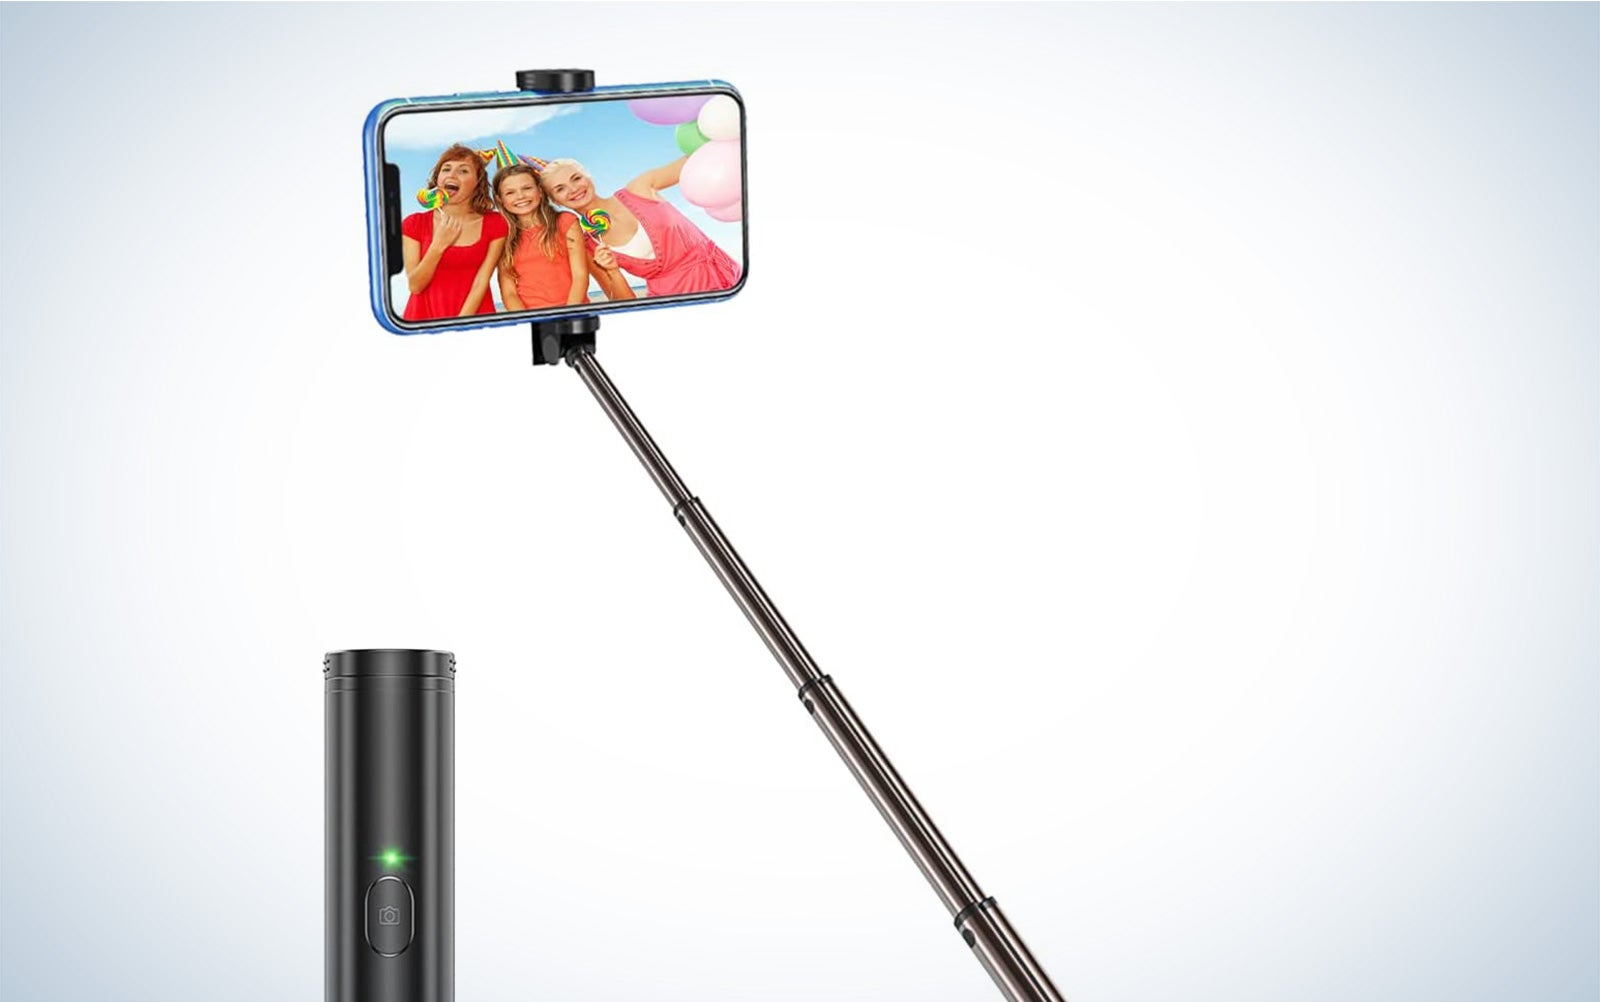 Vproof selfie stick